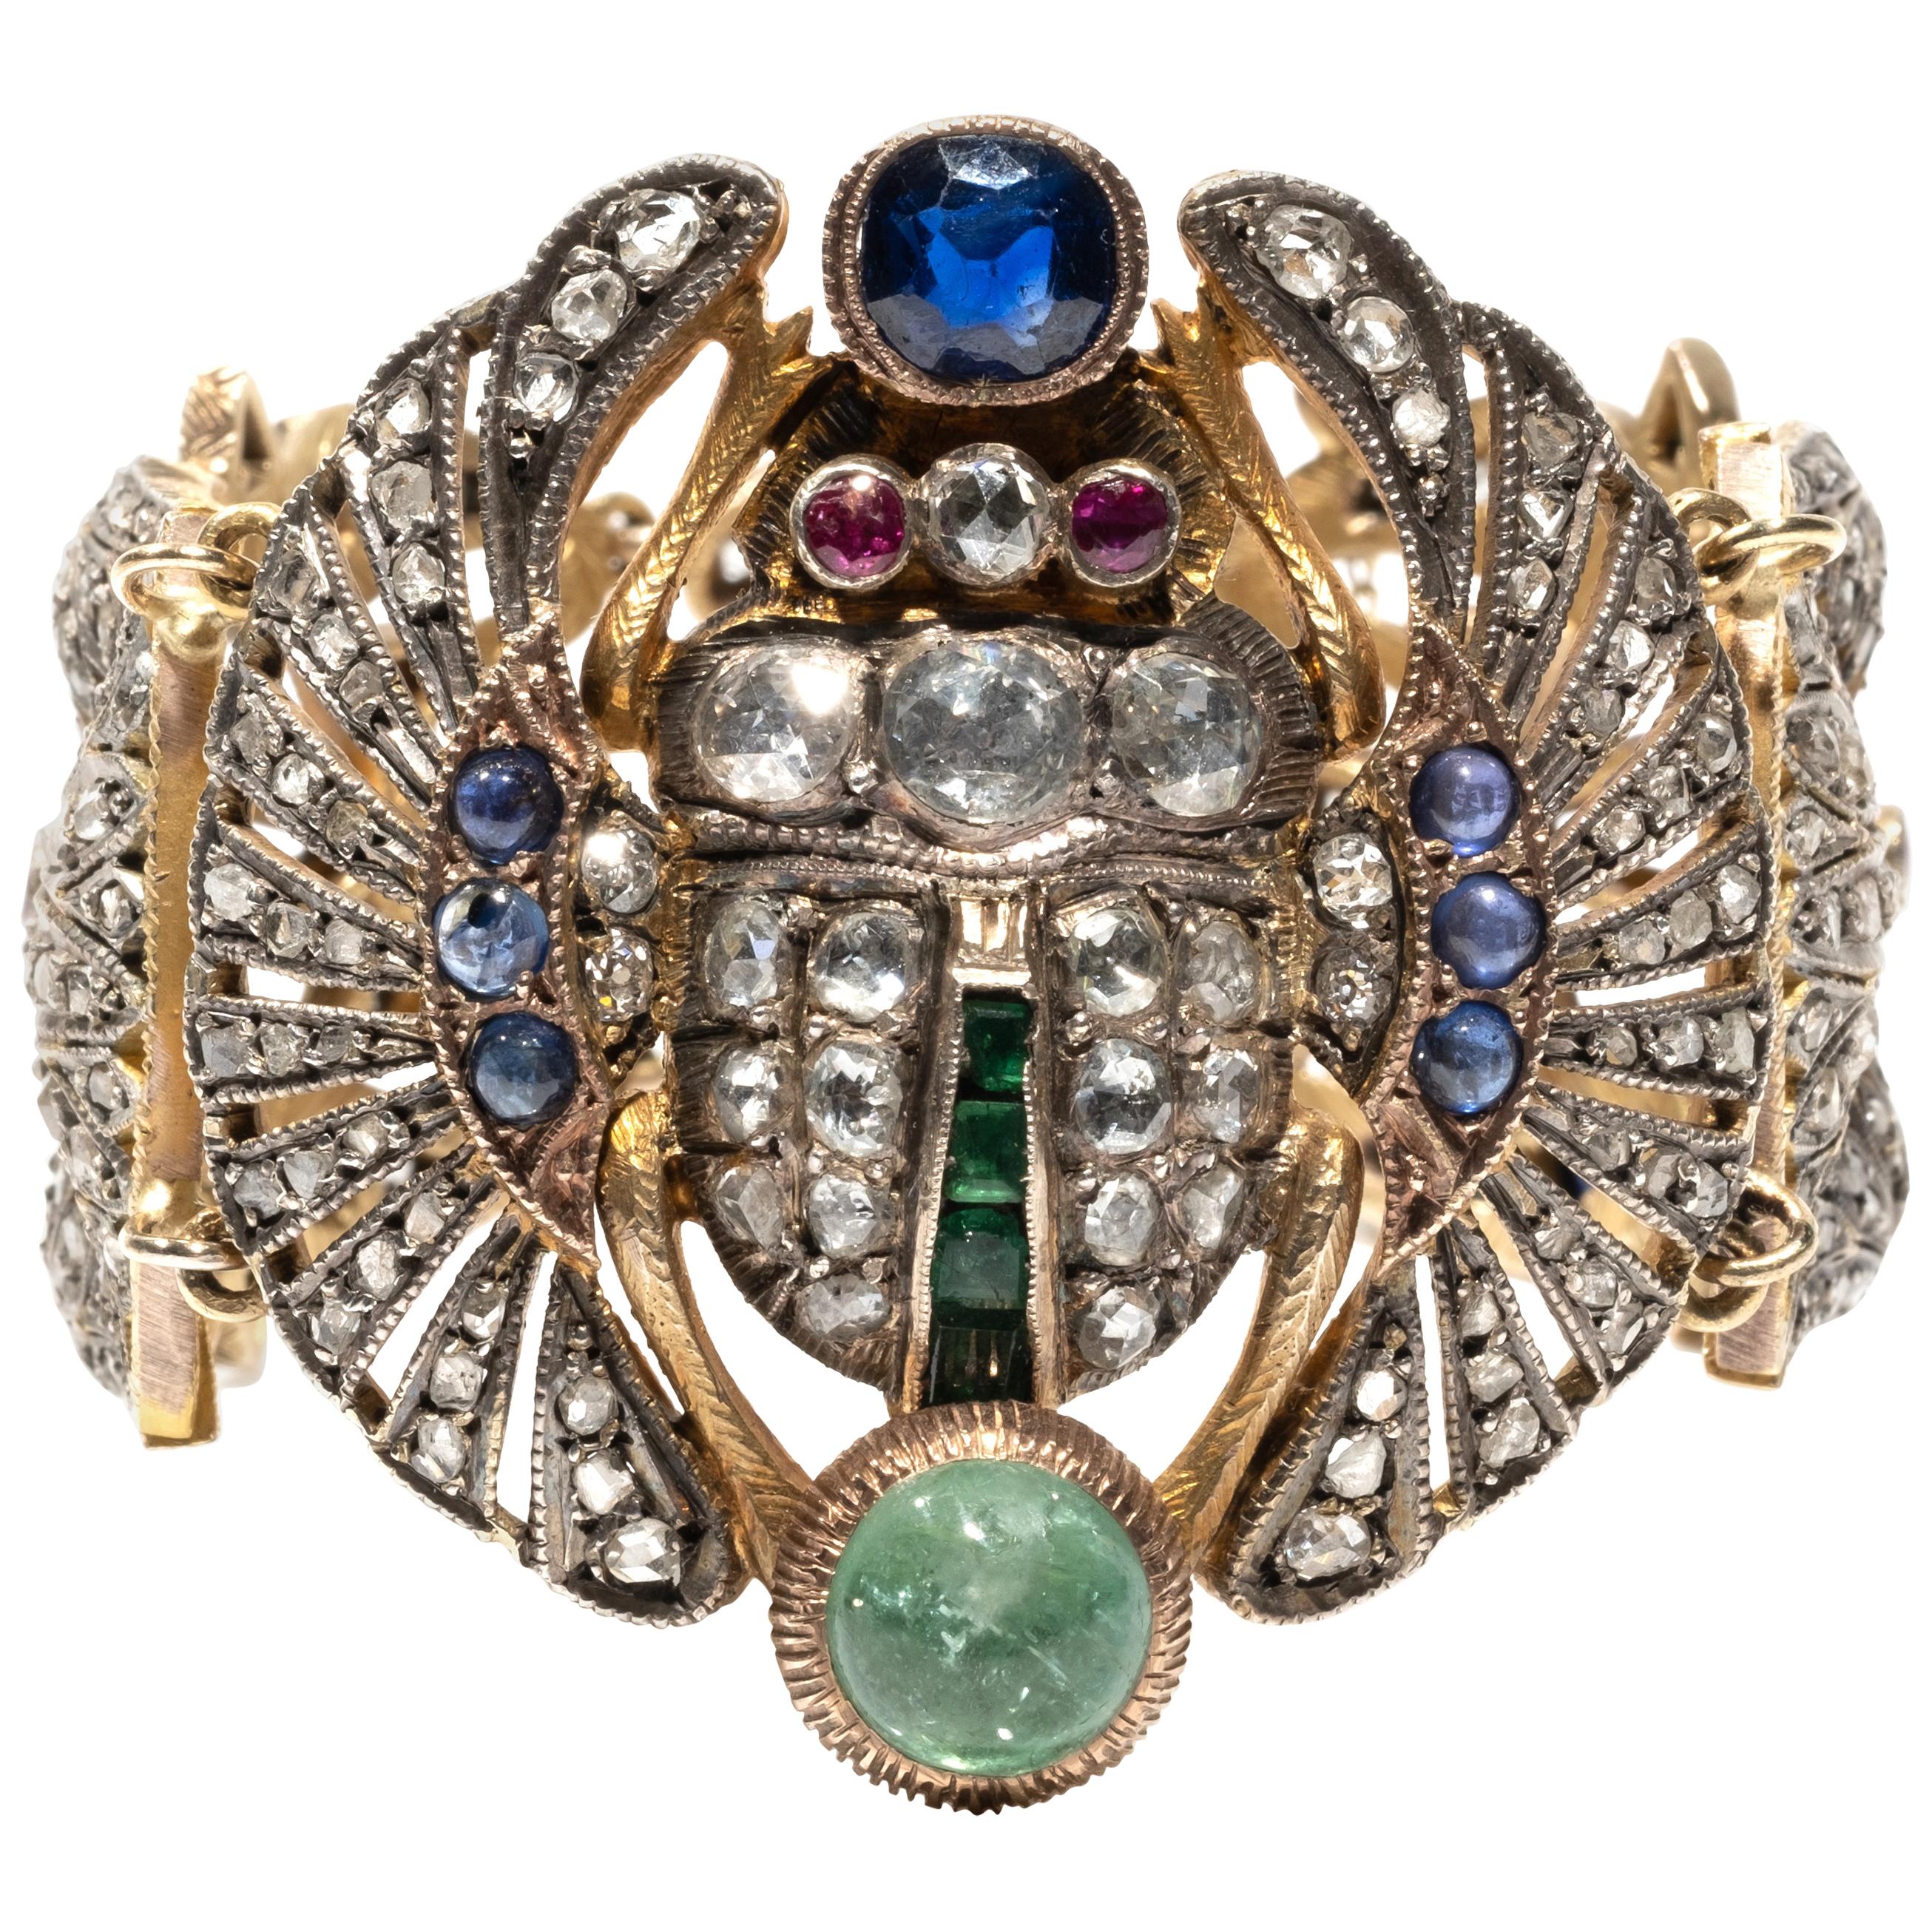 Early 20th Century Egyptian Revival Diamond and Gem-Set Scarab Bracelet